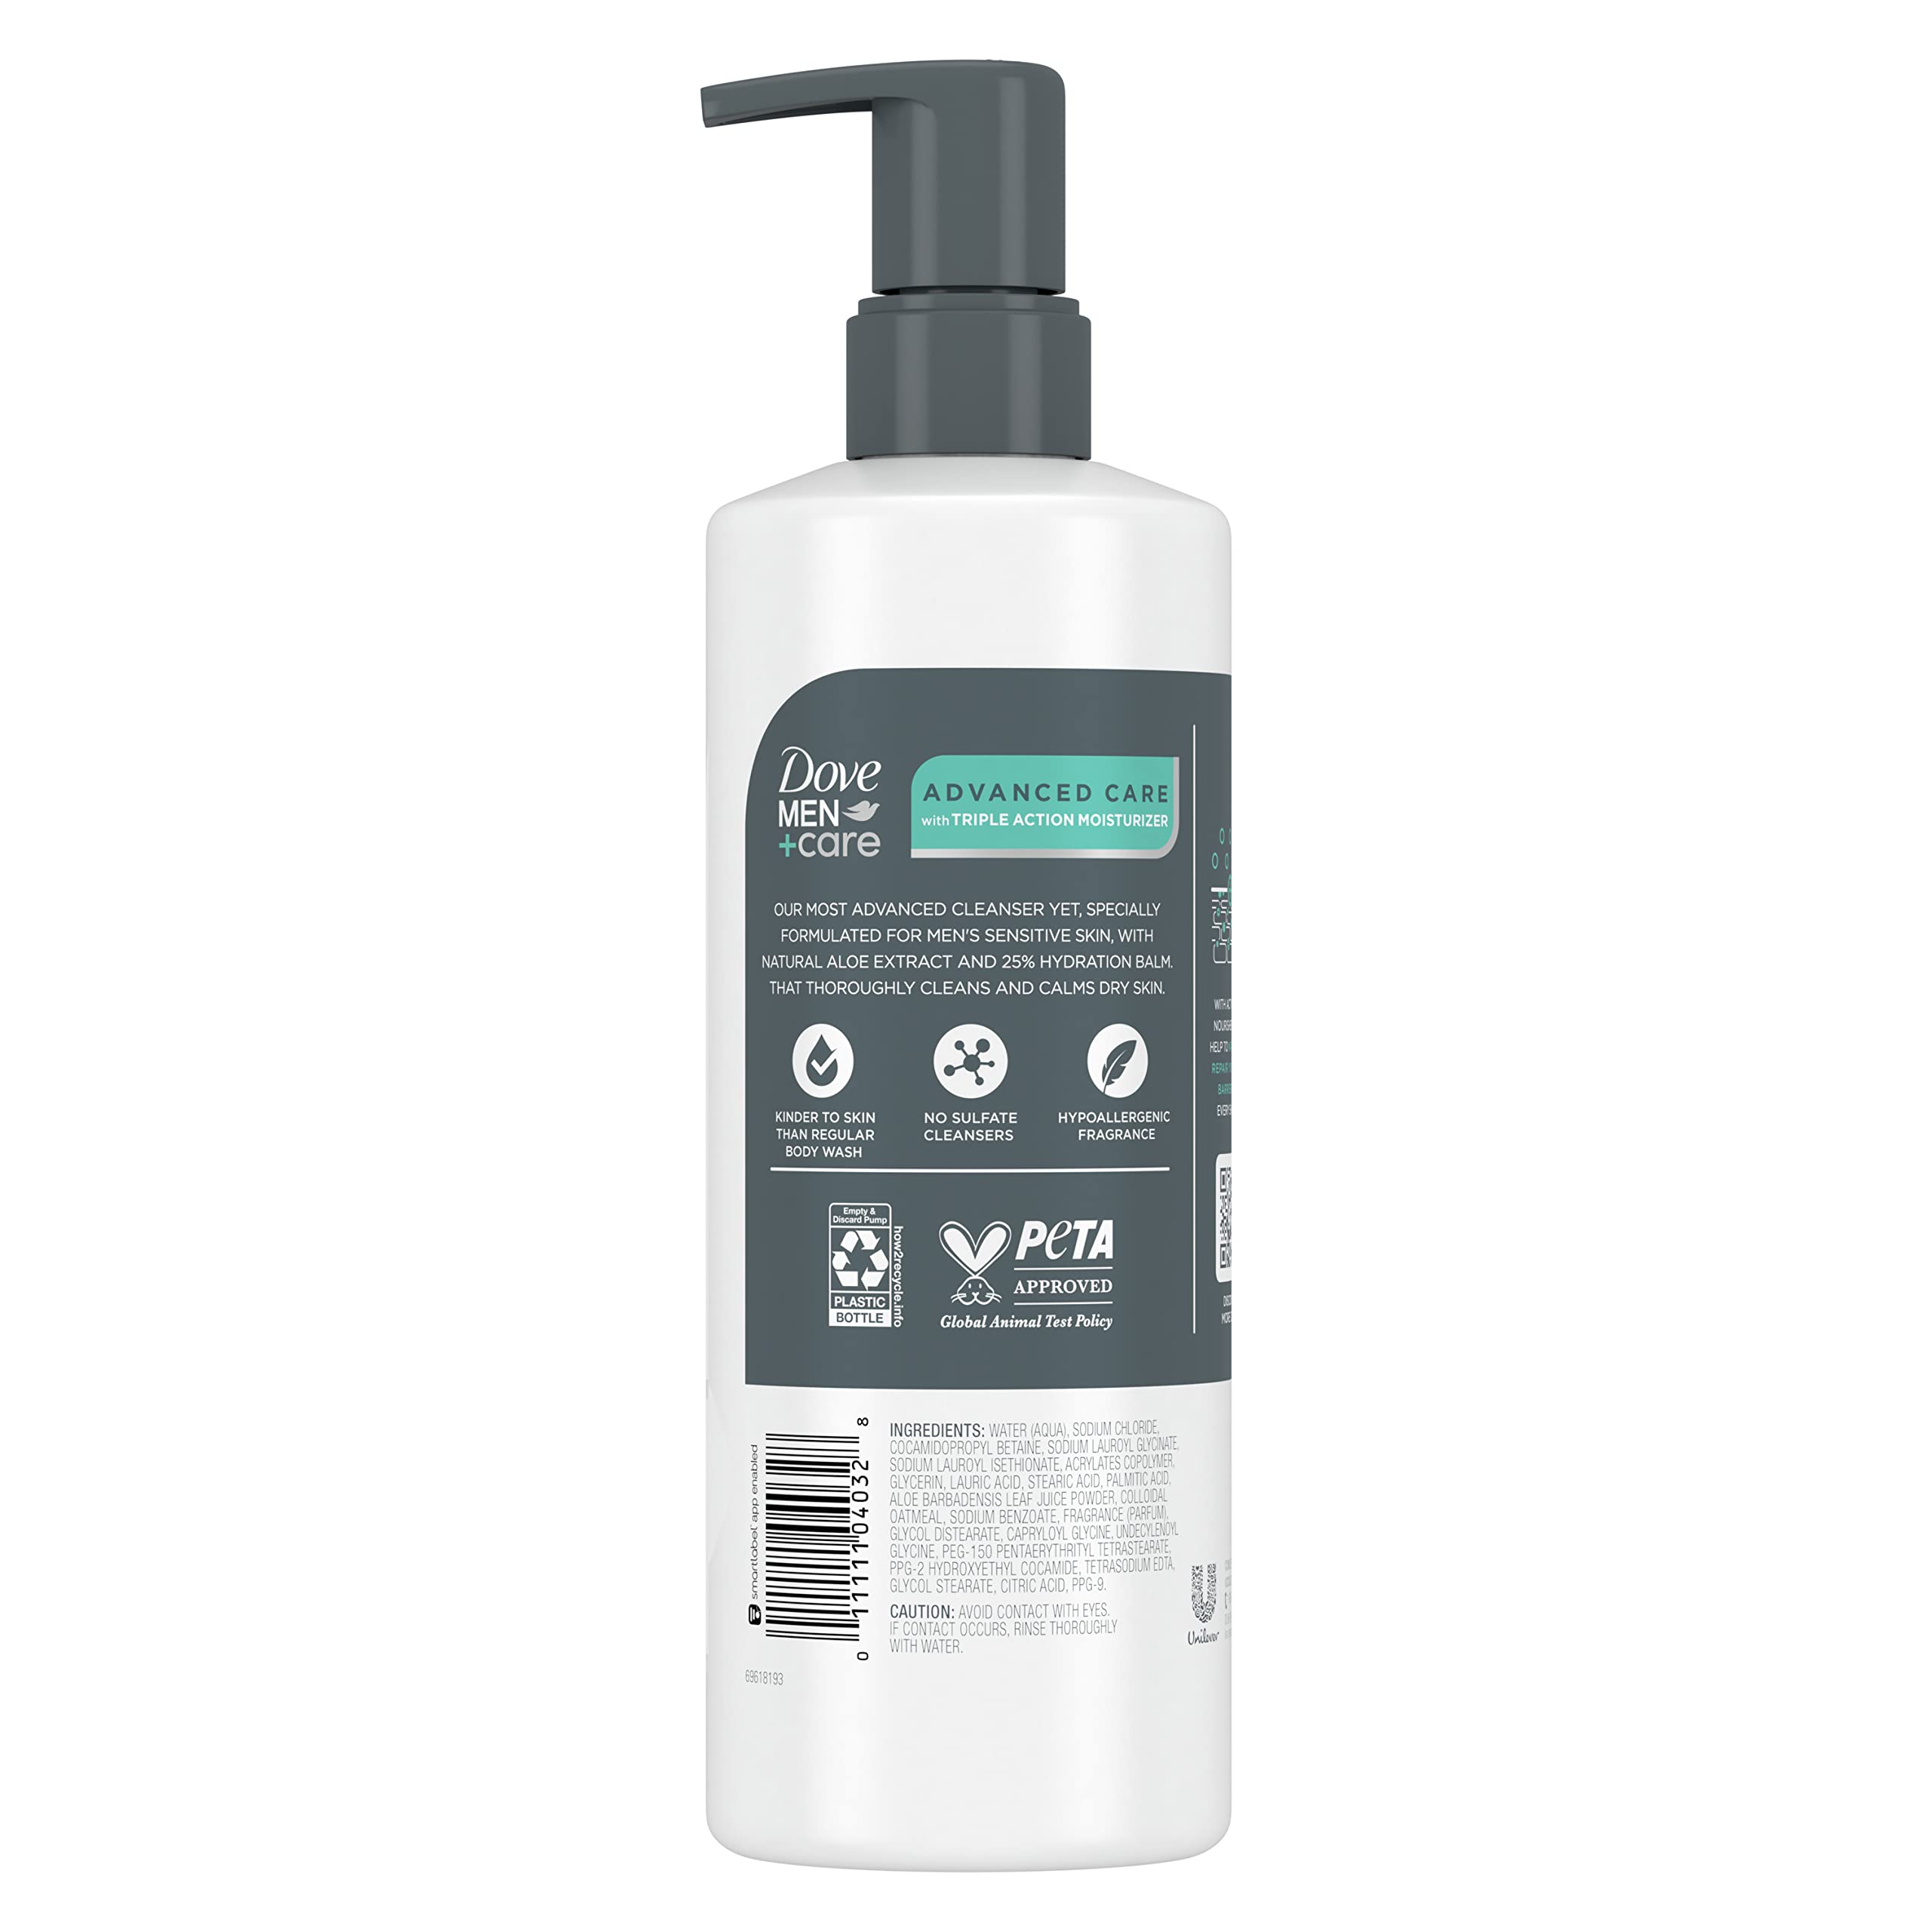 DOVE MEN + CARE Advanced Care Face + Body Cleanser Sensitive Calm 3 Count for Sensitive Skin Body Wash with Natural Extract Aloe Vera 16.9 oz